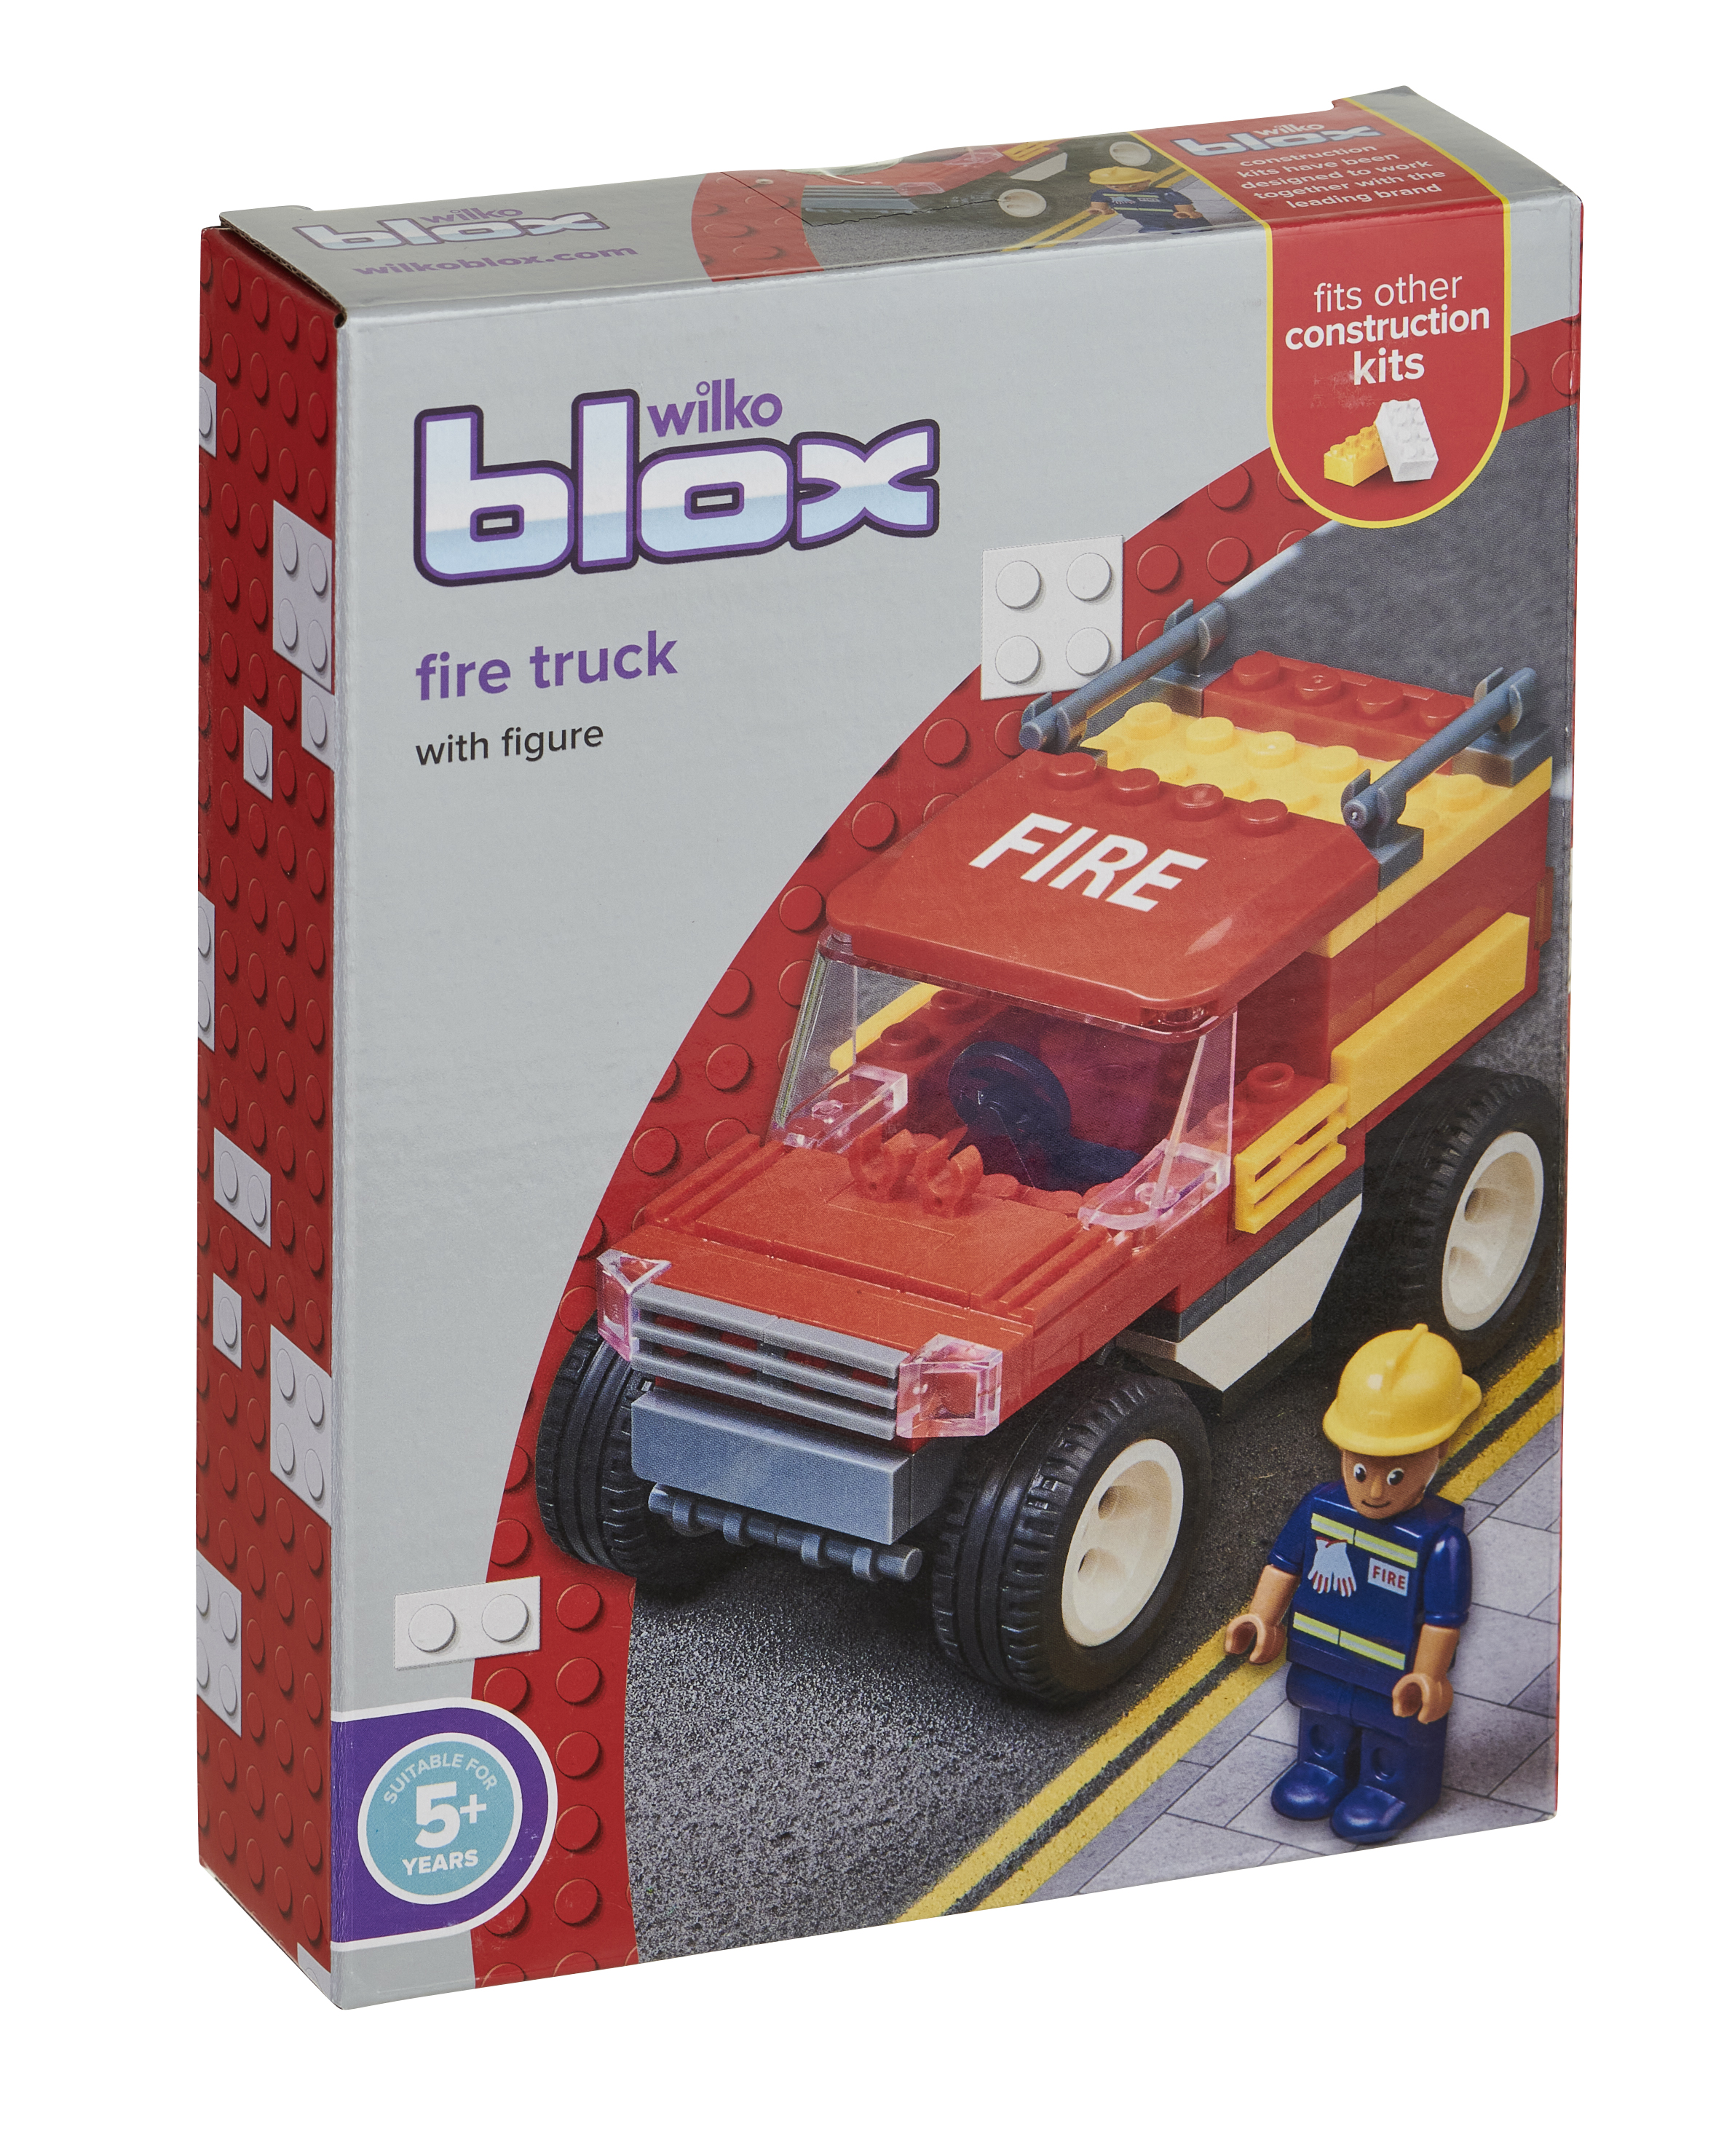 Wilko Blox Fire Truck Small Set Image 2